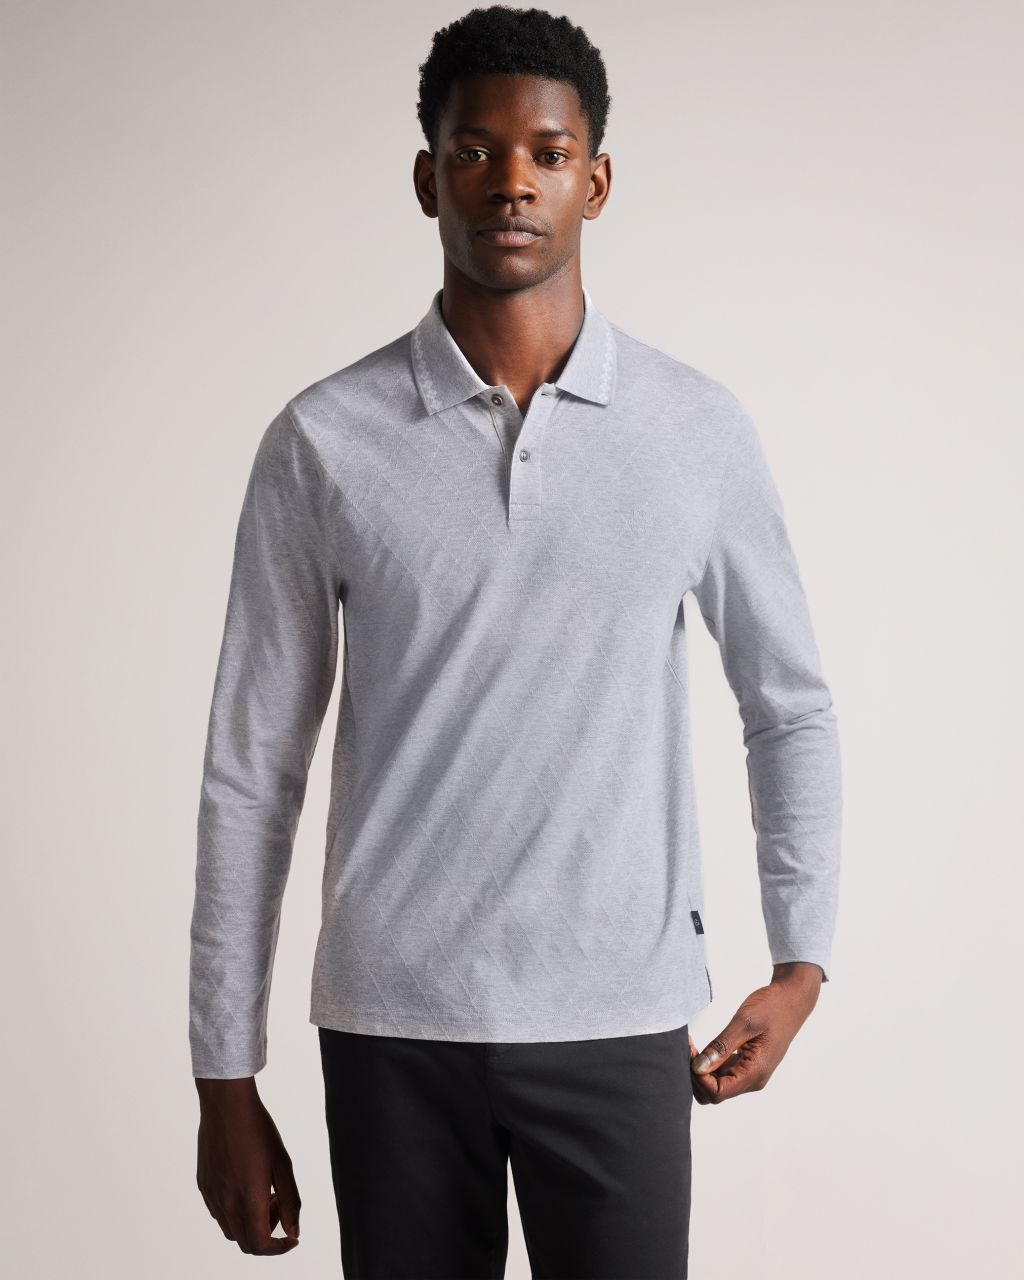 men's long sleeve argyle polo shirt in grey, holrood, cotton